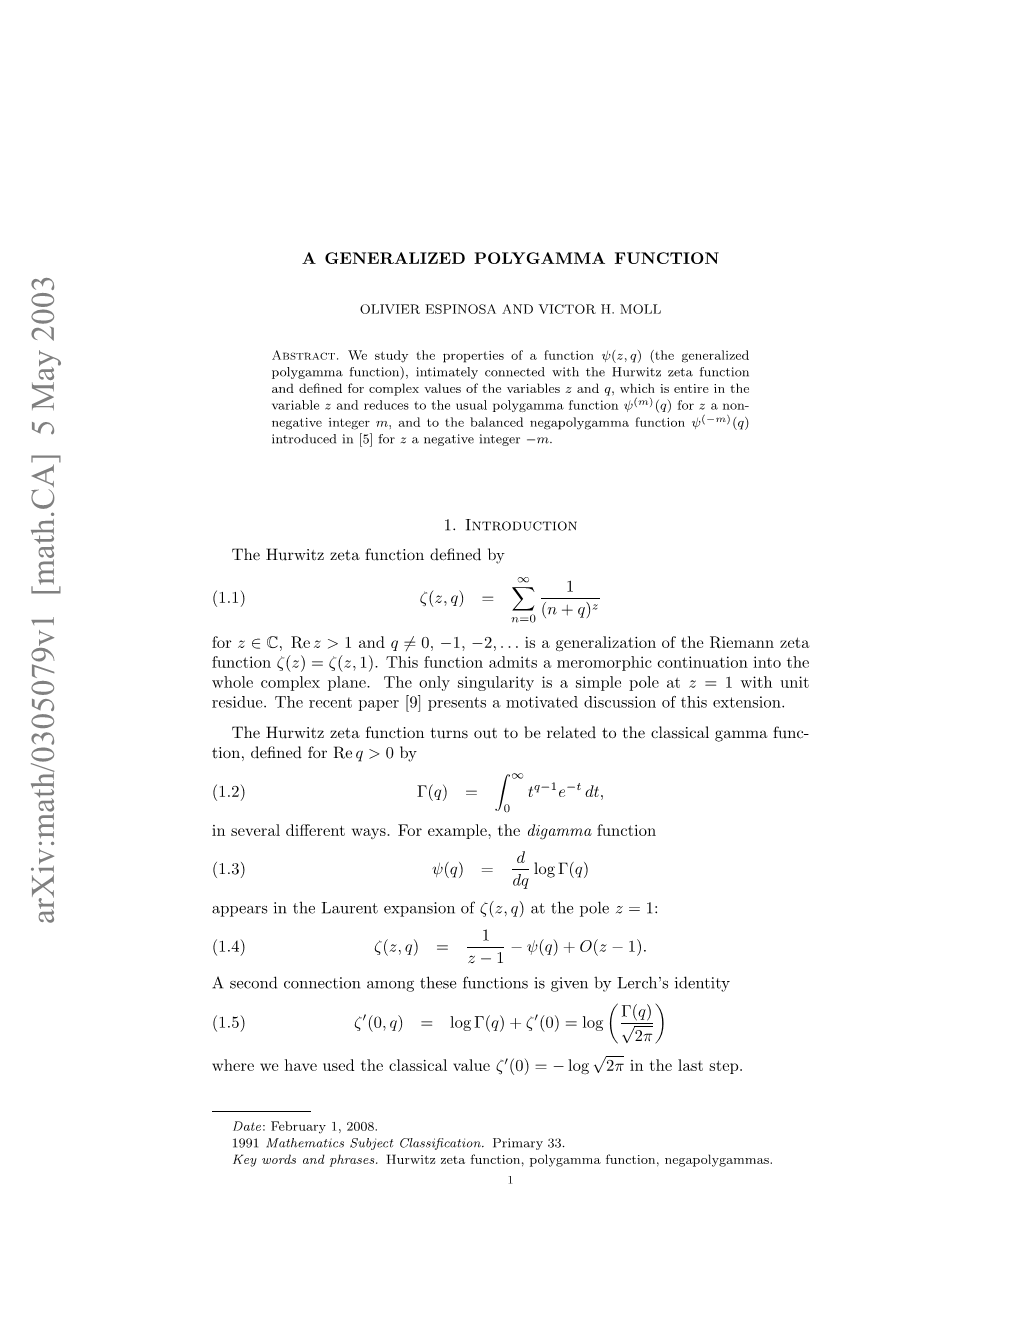 Arxiv:Math/0305079V1 [Math.CA] 5 May 2003 Nsvrldﬀrn As O Xml,The Example, for Ways